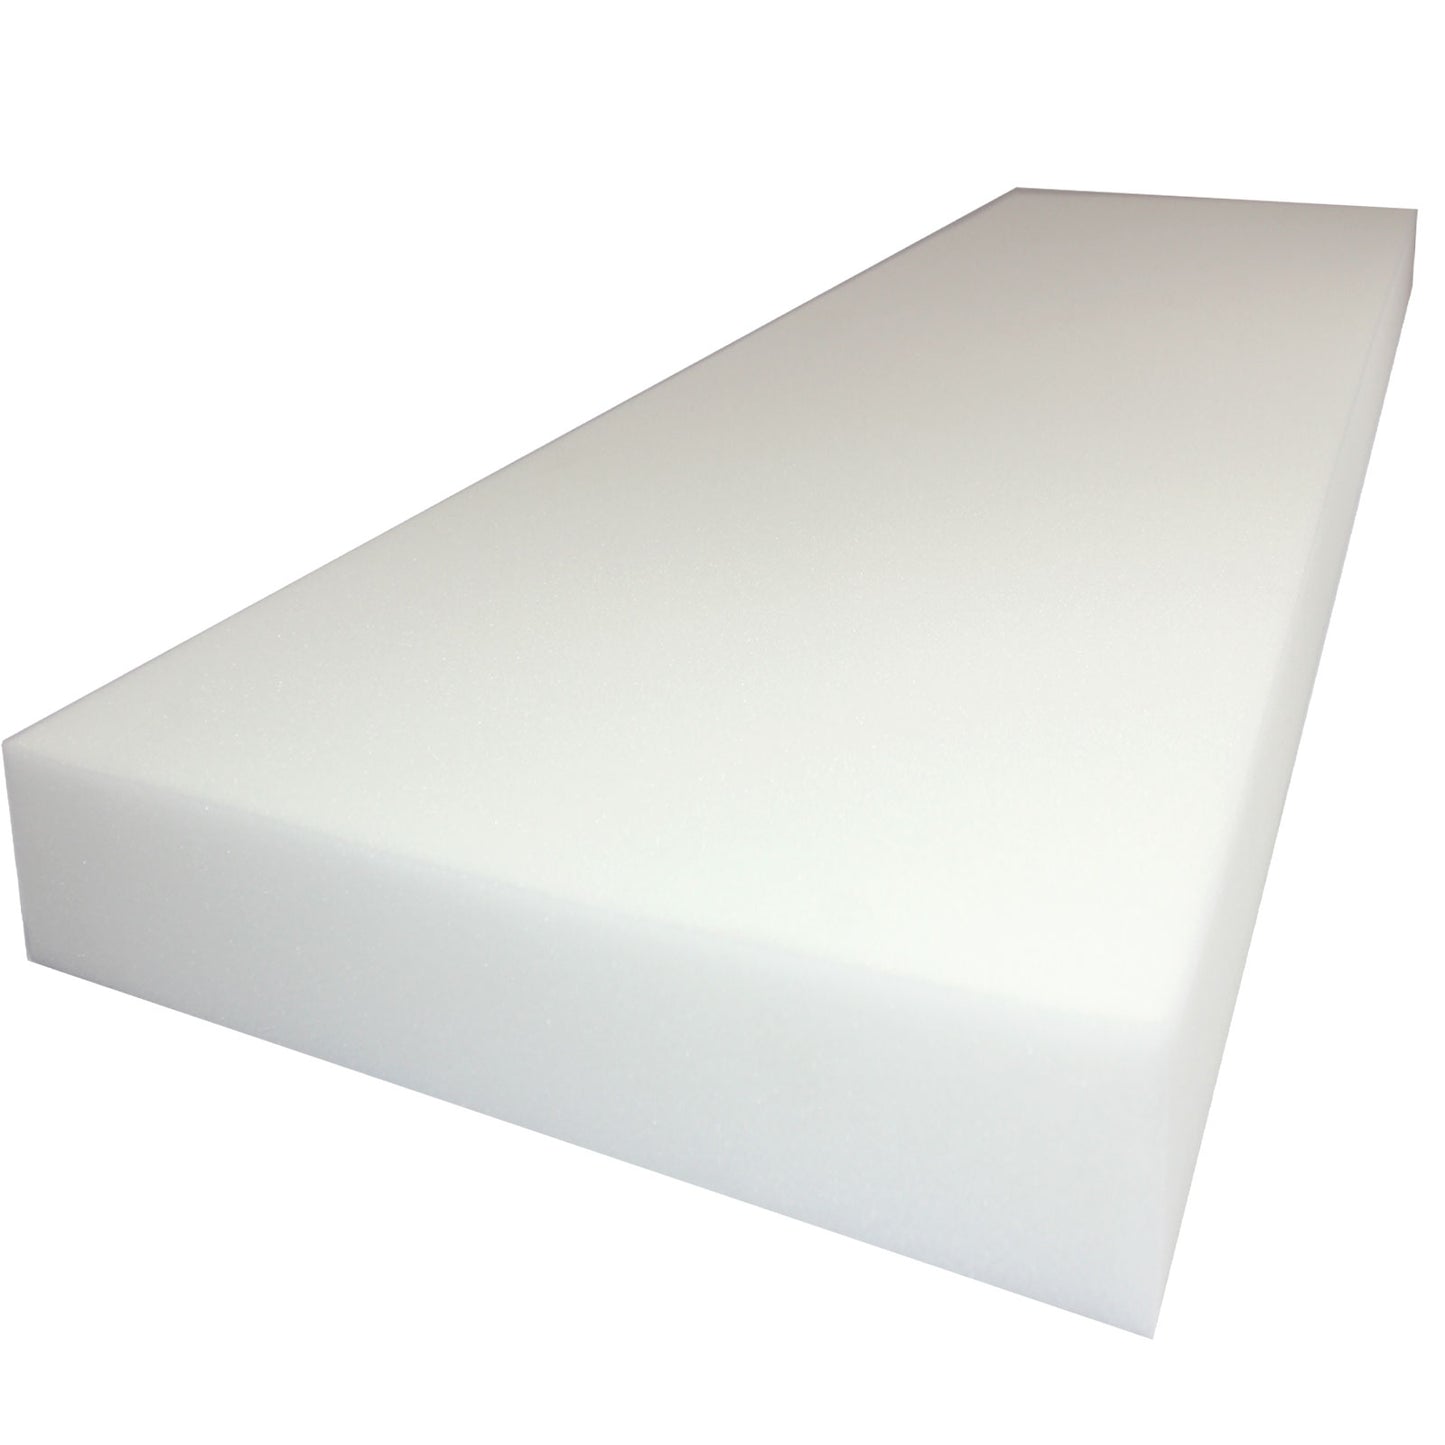 Mybecca 1" x 24" x 24" High Density Upholstery Foam Cushion (Seat Replacement, Upholstery Sheet, Foam Padding)